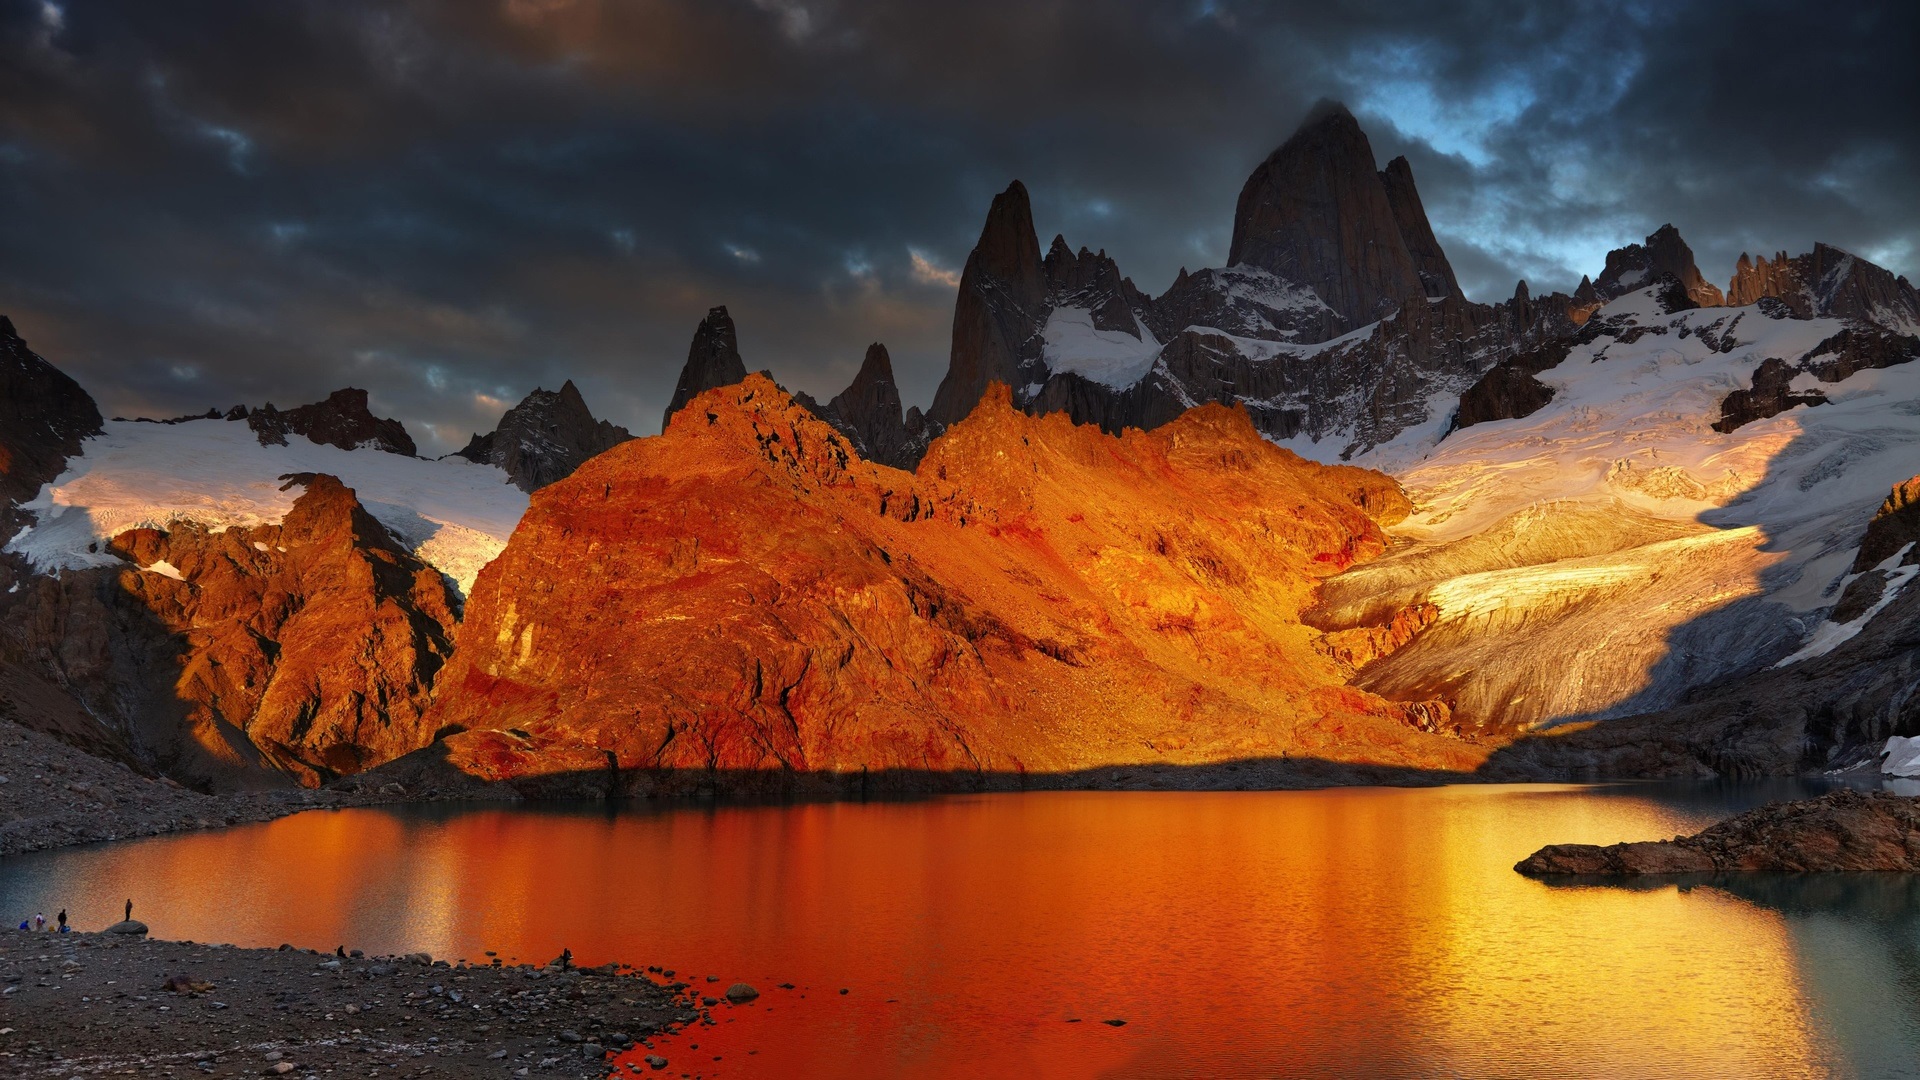 patagonia mountains